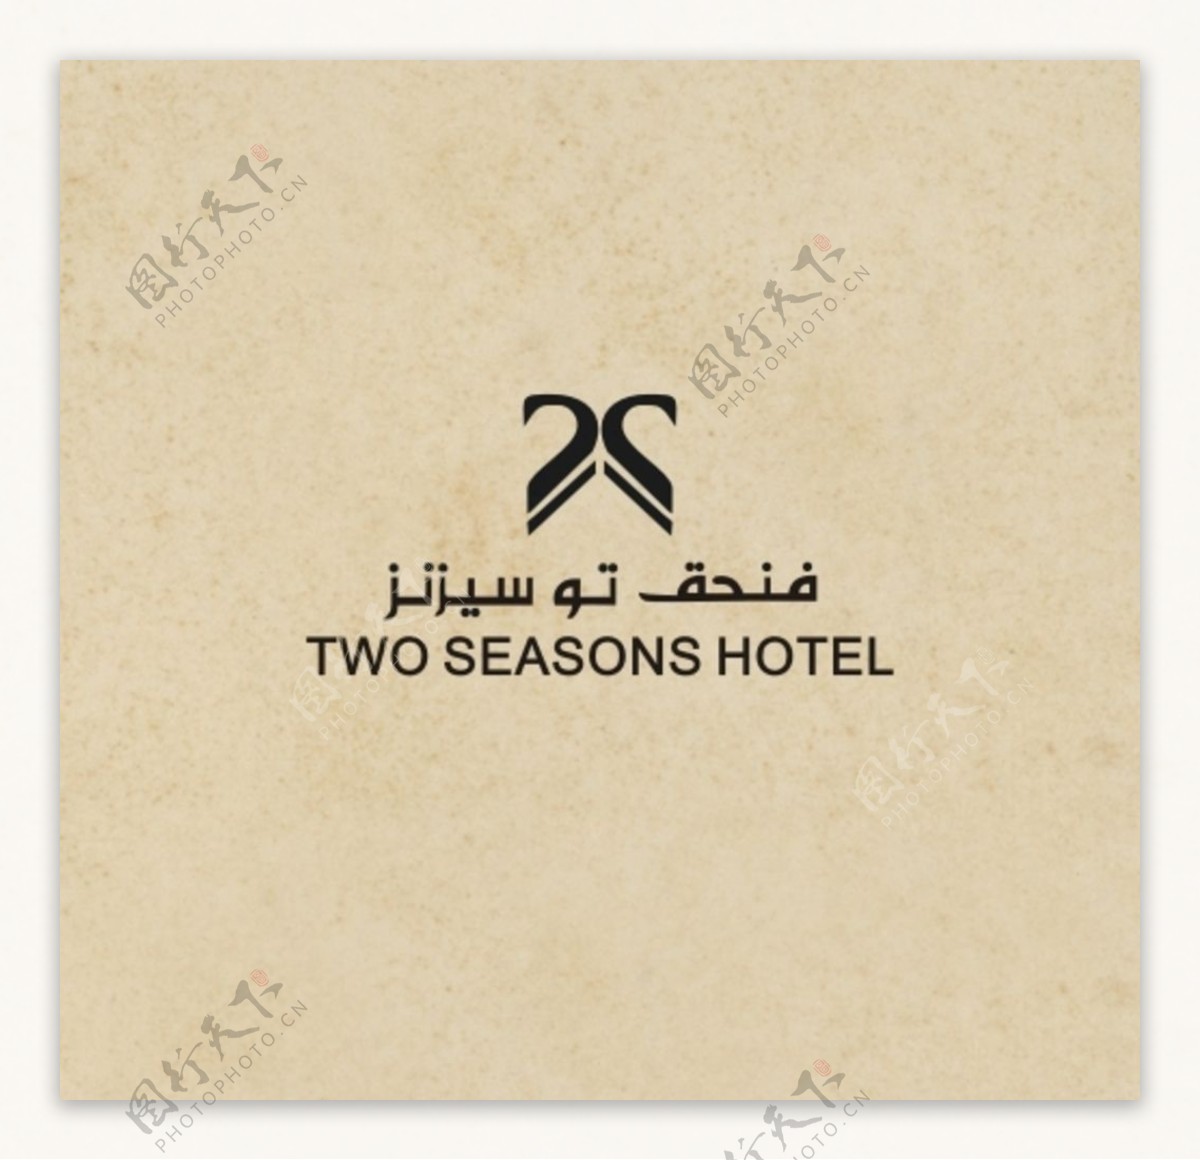 酒店logo标志TWO